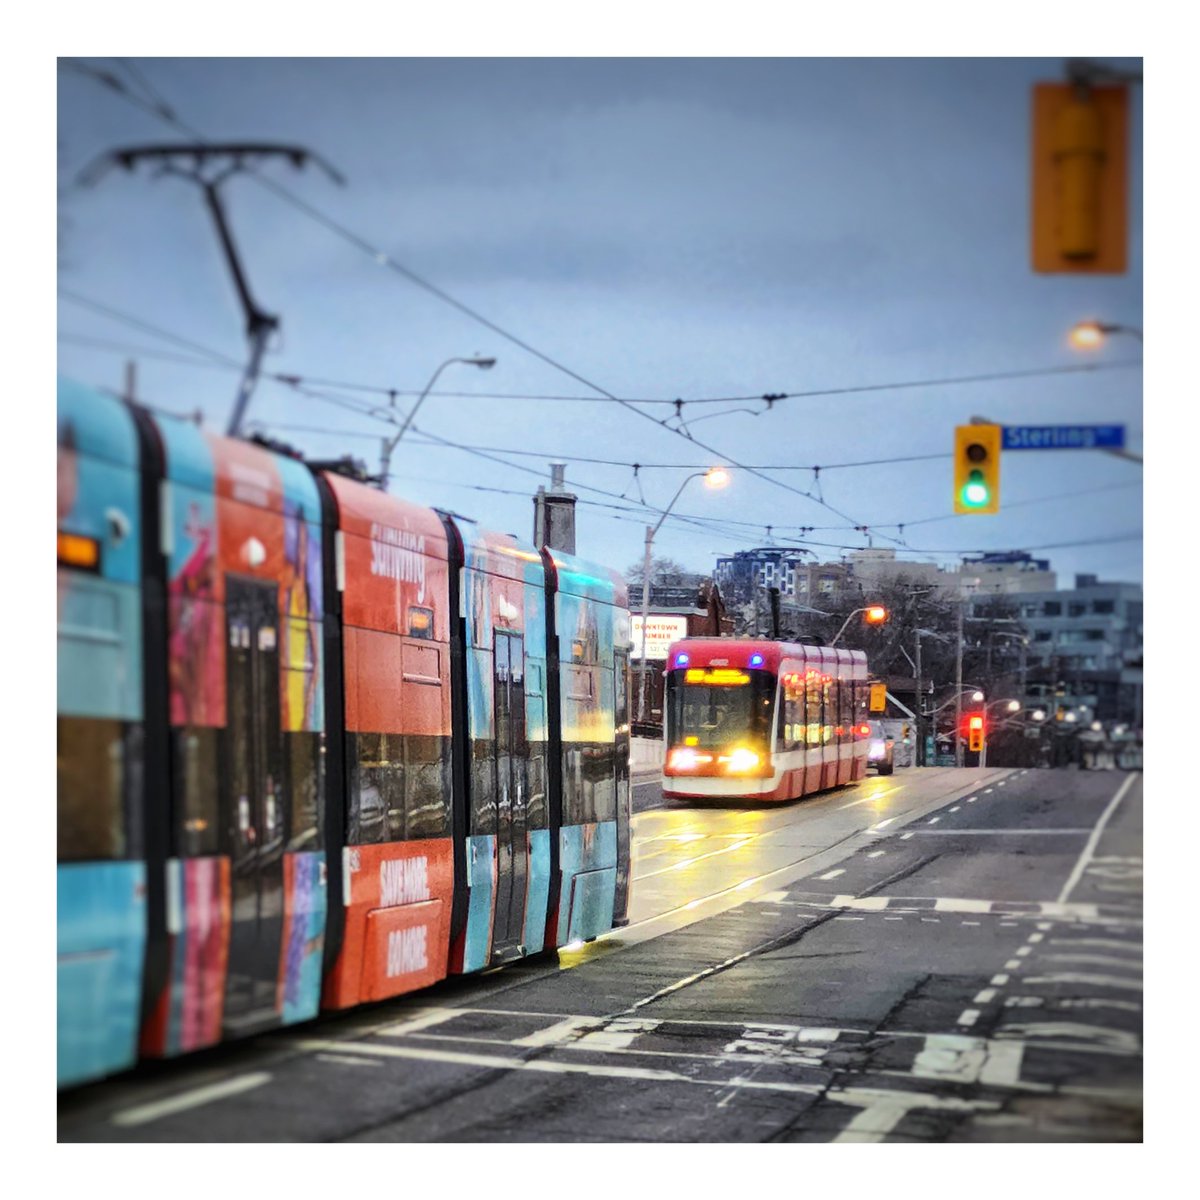 (Un)Wrapped. #TTC #Toronto #DundasStreetWest #Streetcar #TransitPhotography #Photography